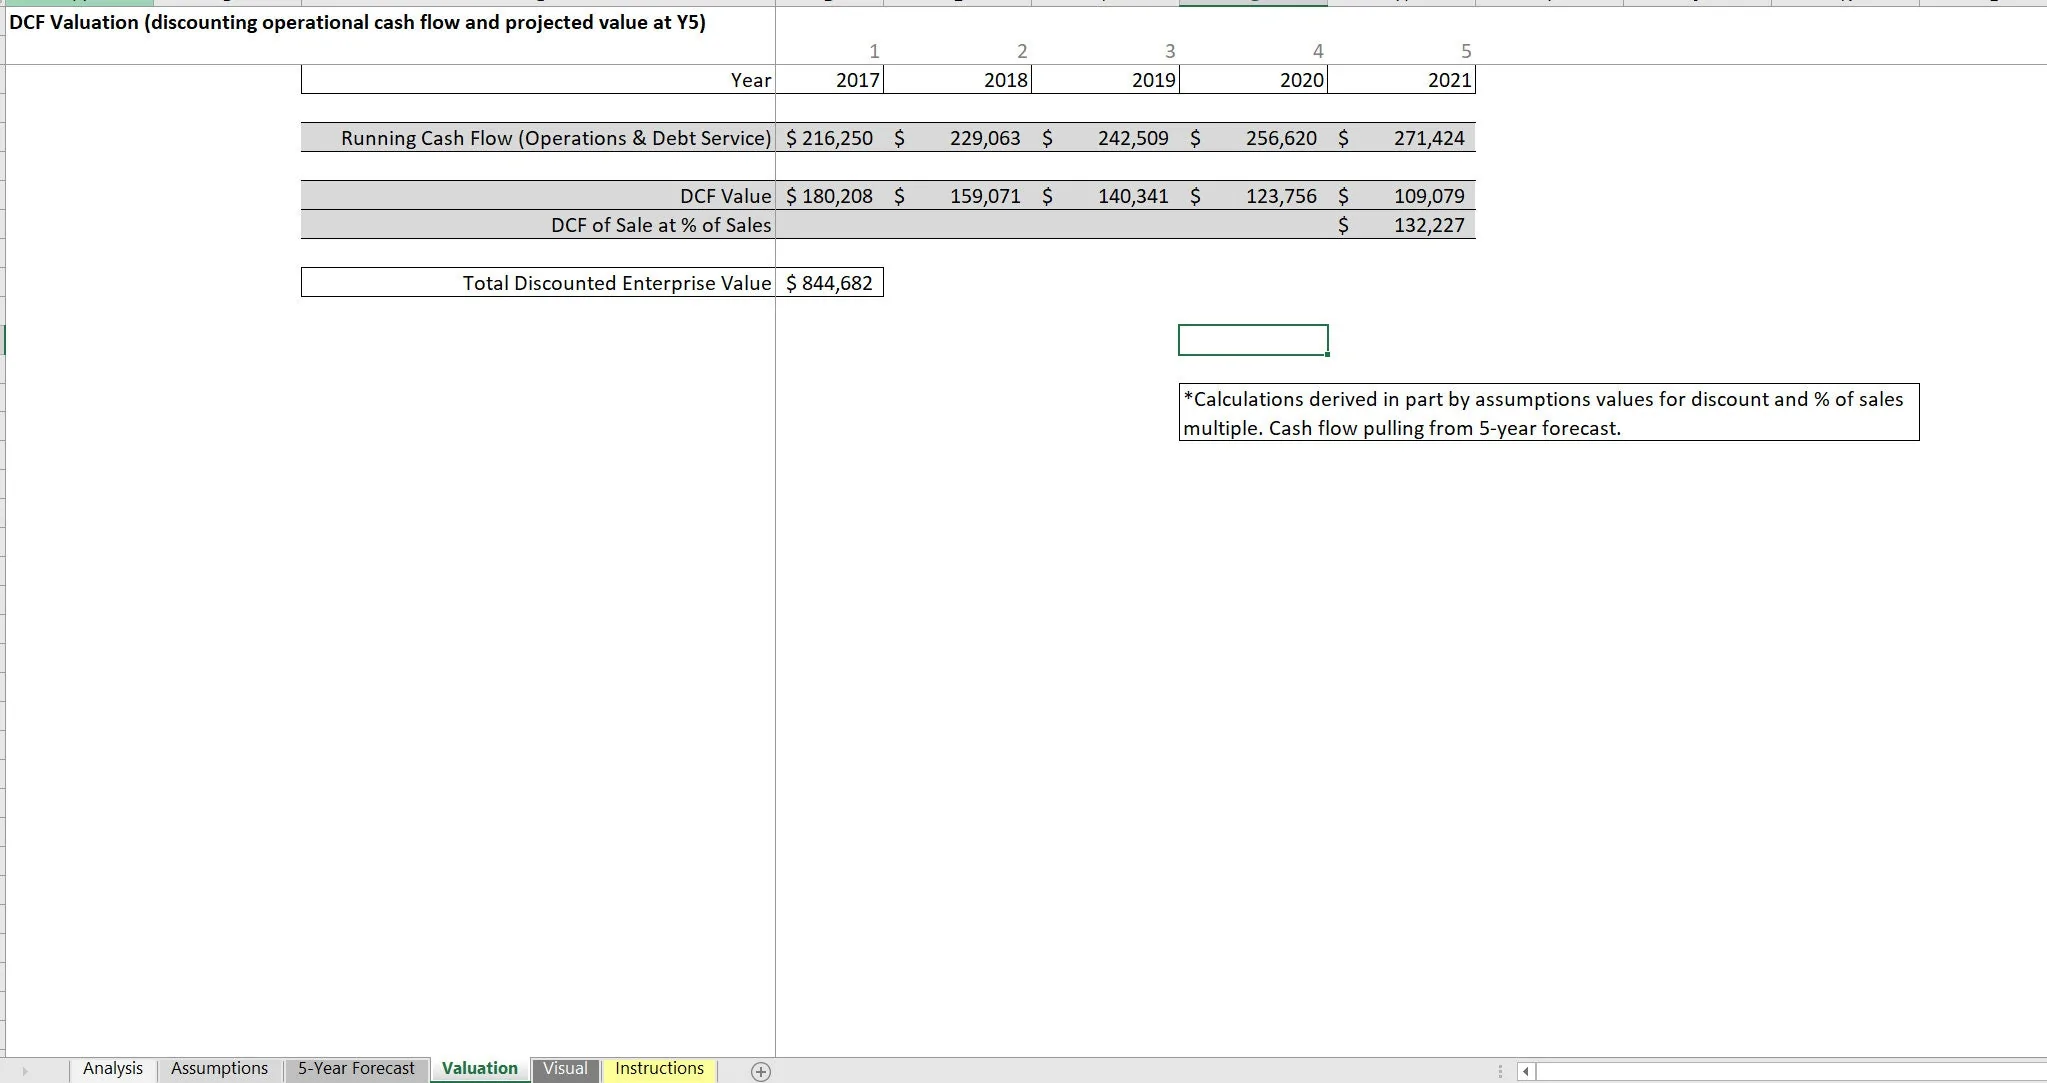 Break Even Analysis Template (Excel workbook (XLSX)) Preview Image